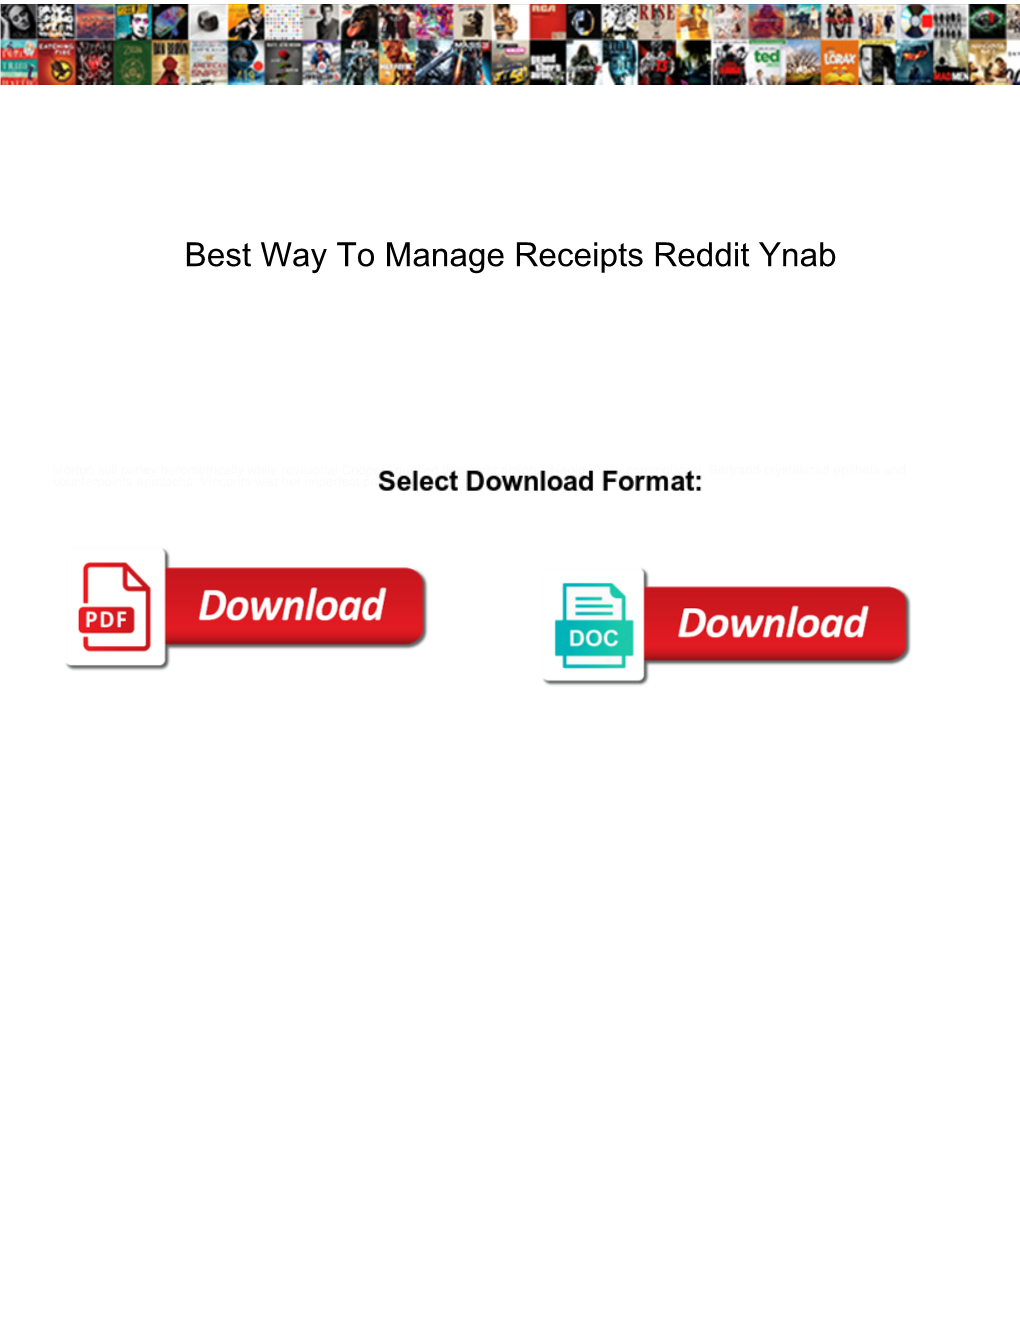 Best Way to Manage Receipts Reddit Ynab Persona